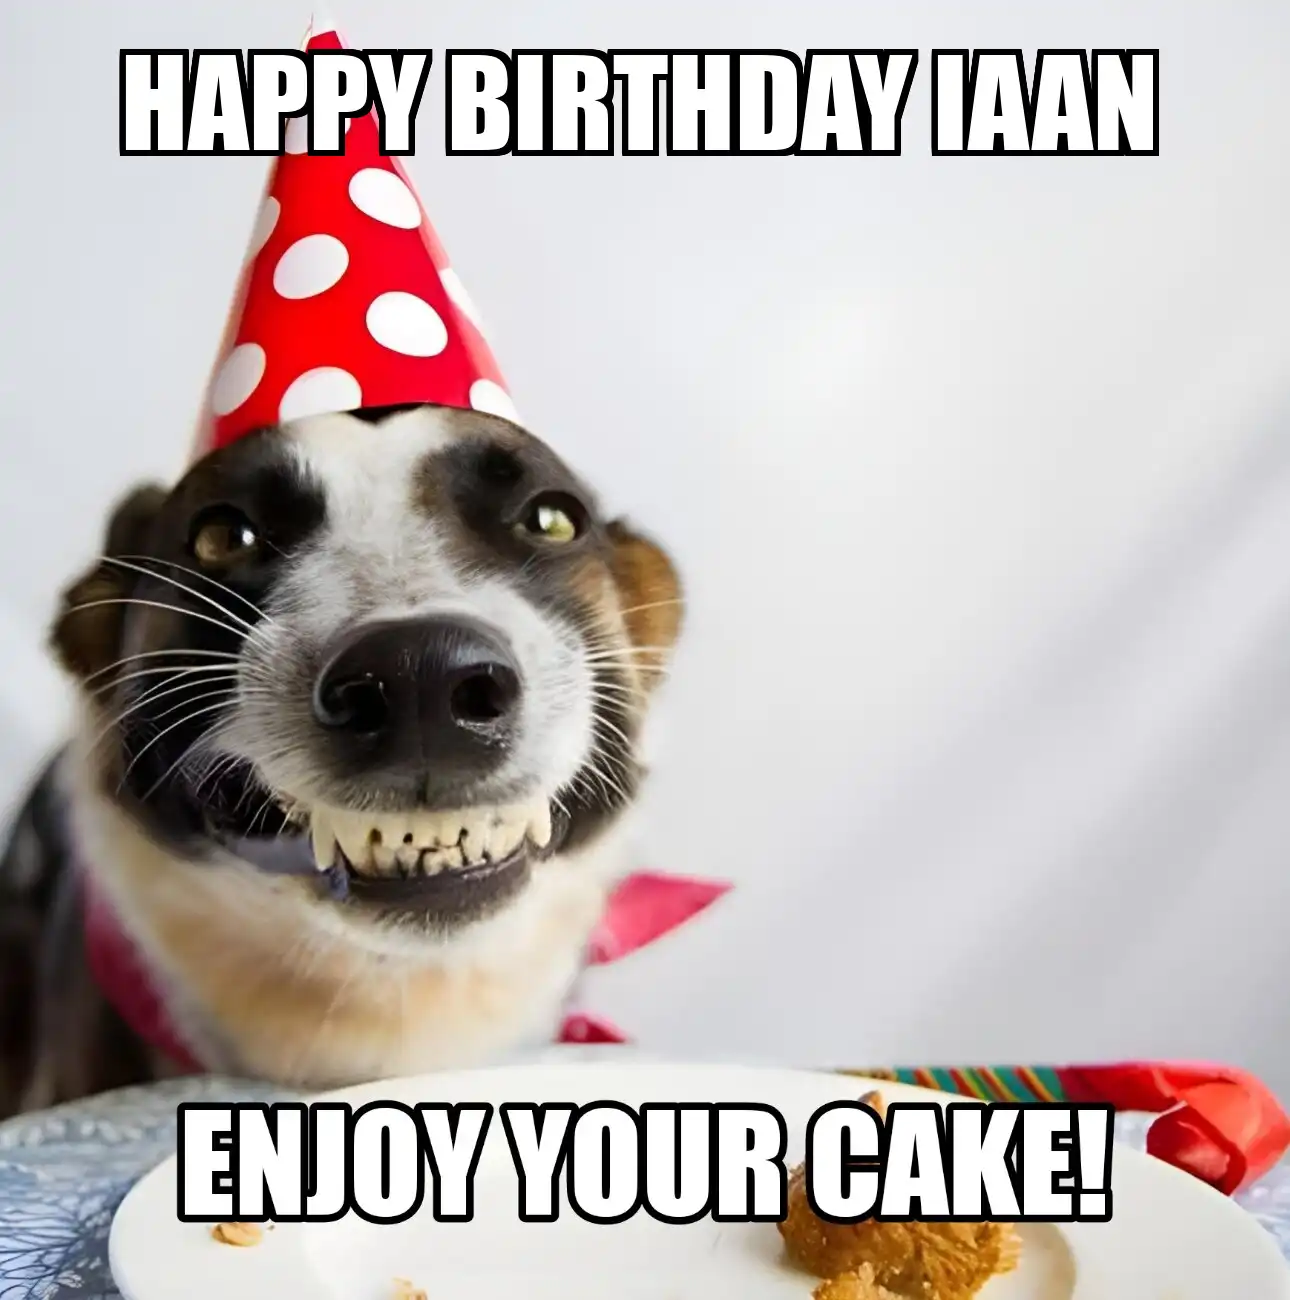 Happy Birthday Iaan Enjoy Your Cake Dog Meme